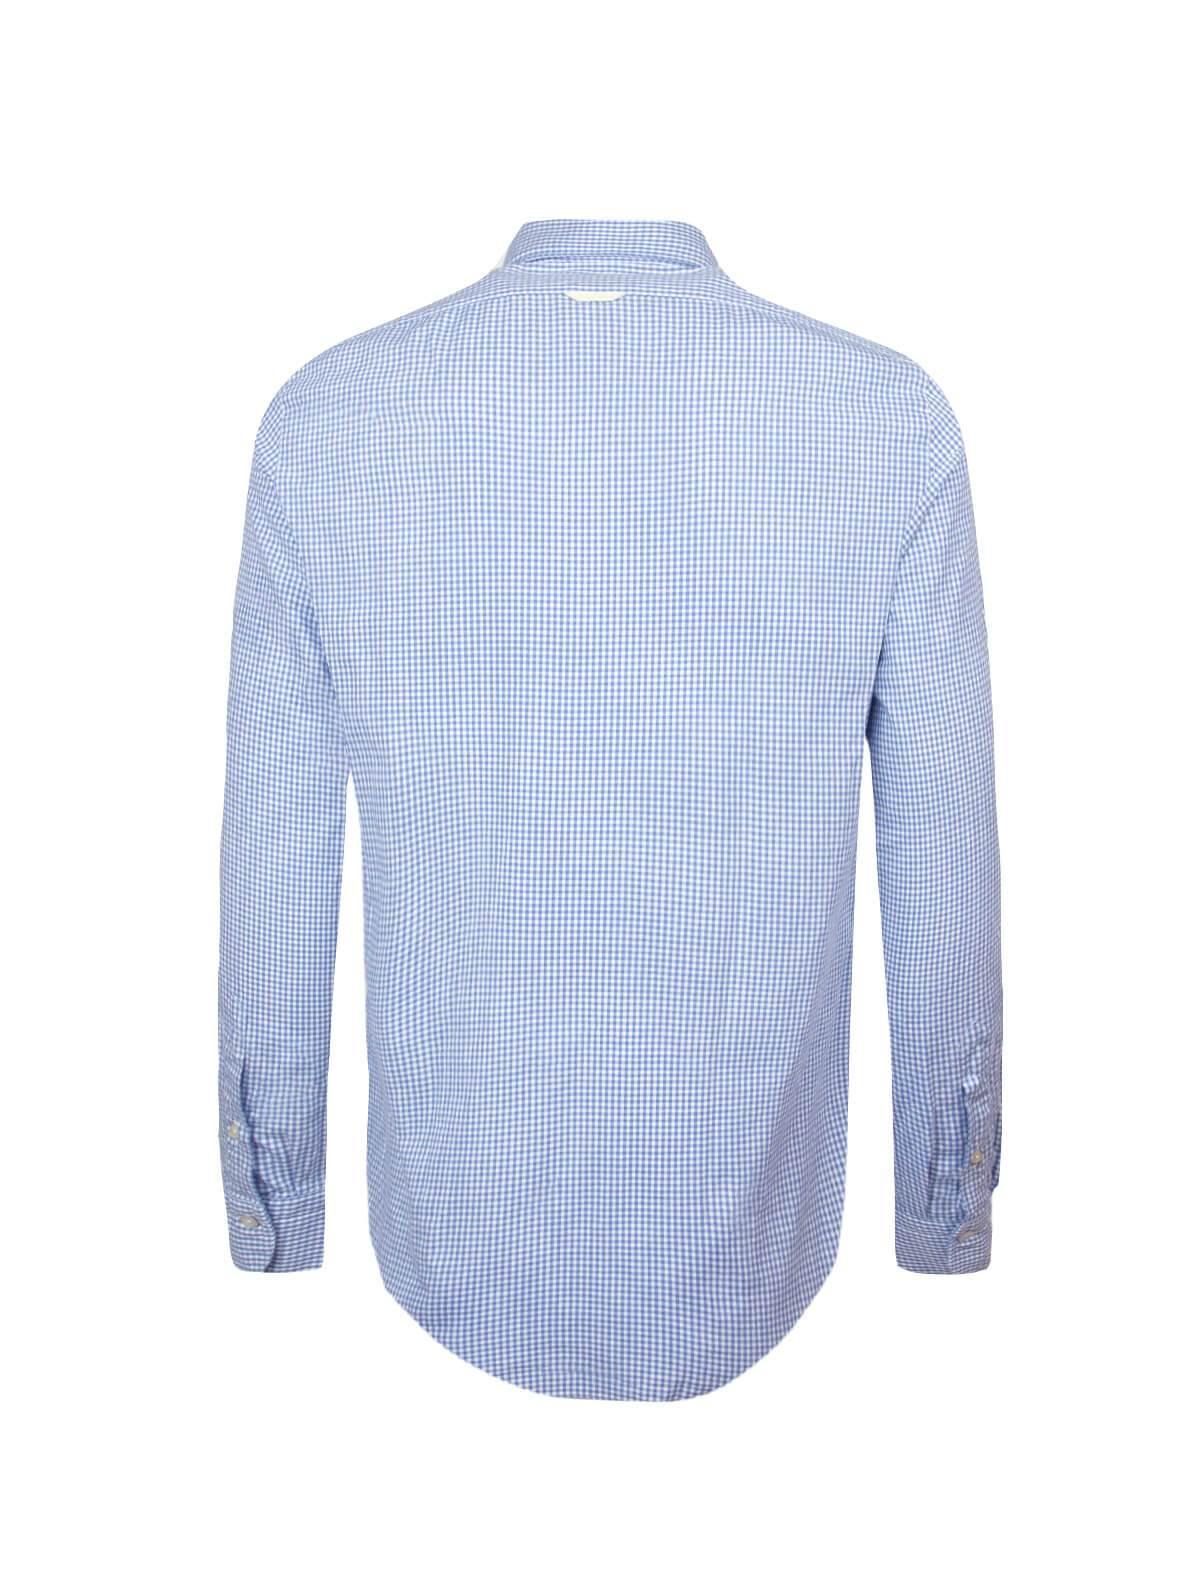 FINAMORE 1925 Tokyo Cotton Chambray Shirt in Light Blue Checks | CLOSET Singapore